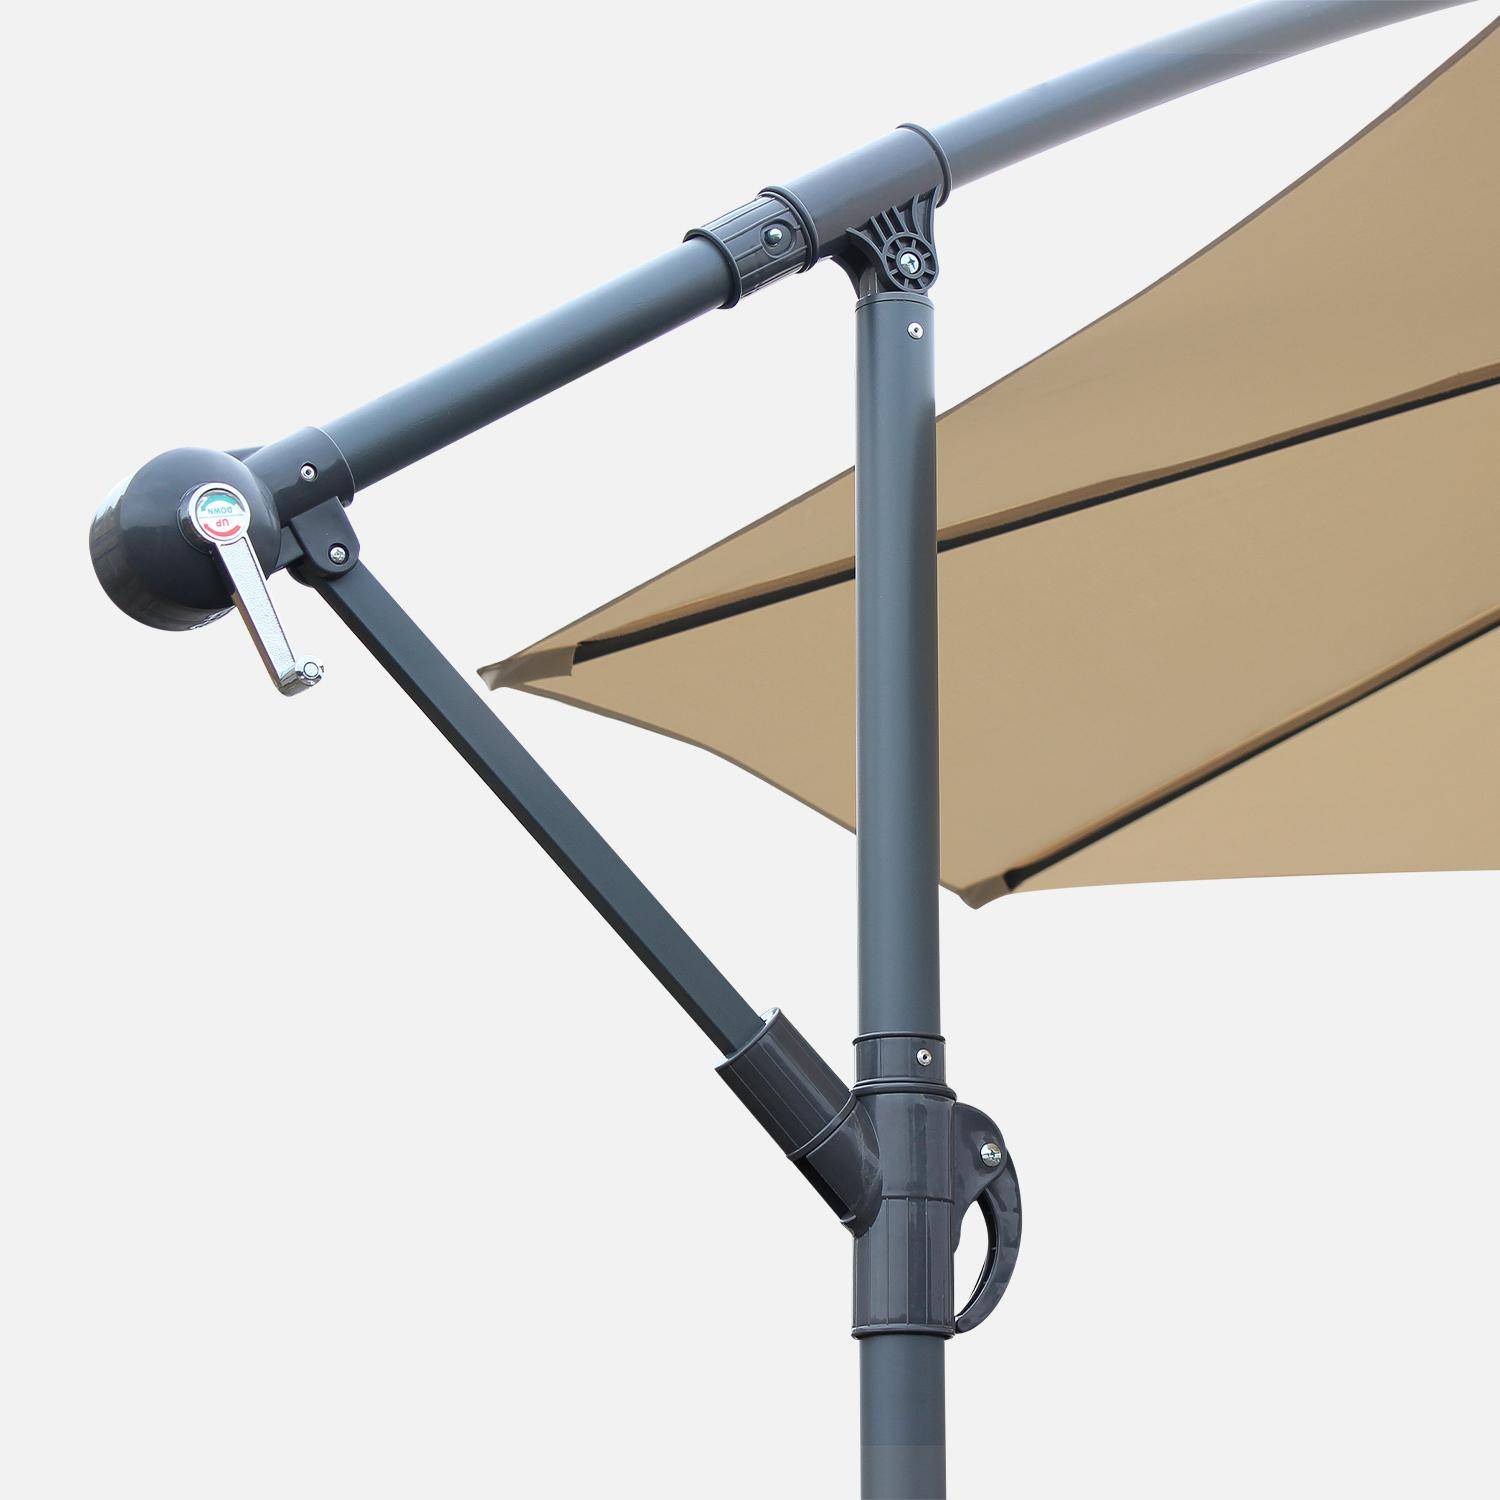 Paraguas redondo 3x3m - Hardelot - Beige - Manivela antirretorno | Tejido impermeable | Fácil de usar,sweeek,Photo4